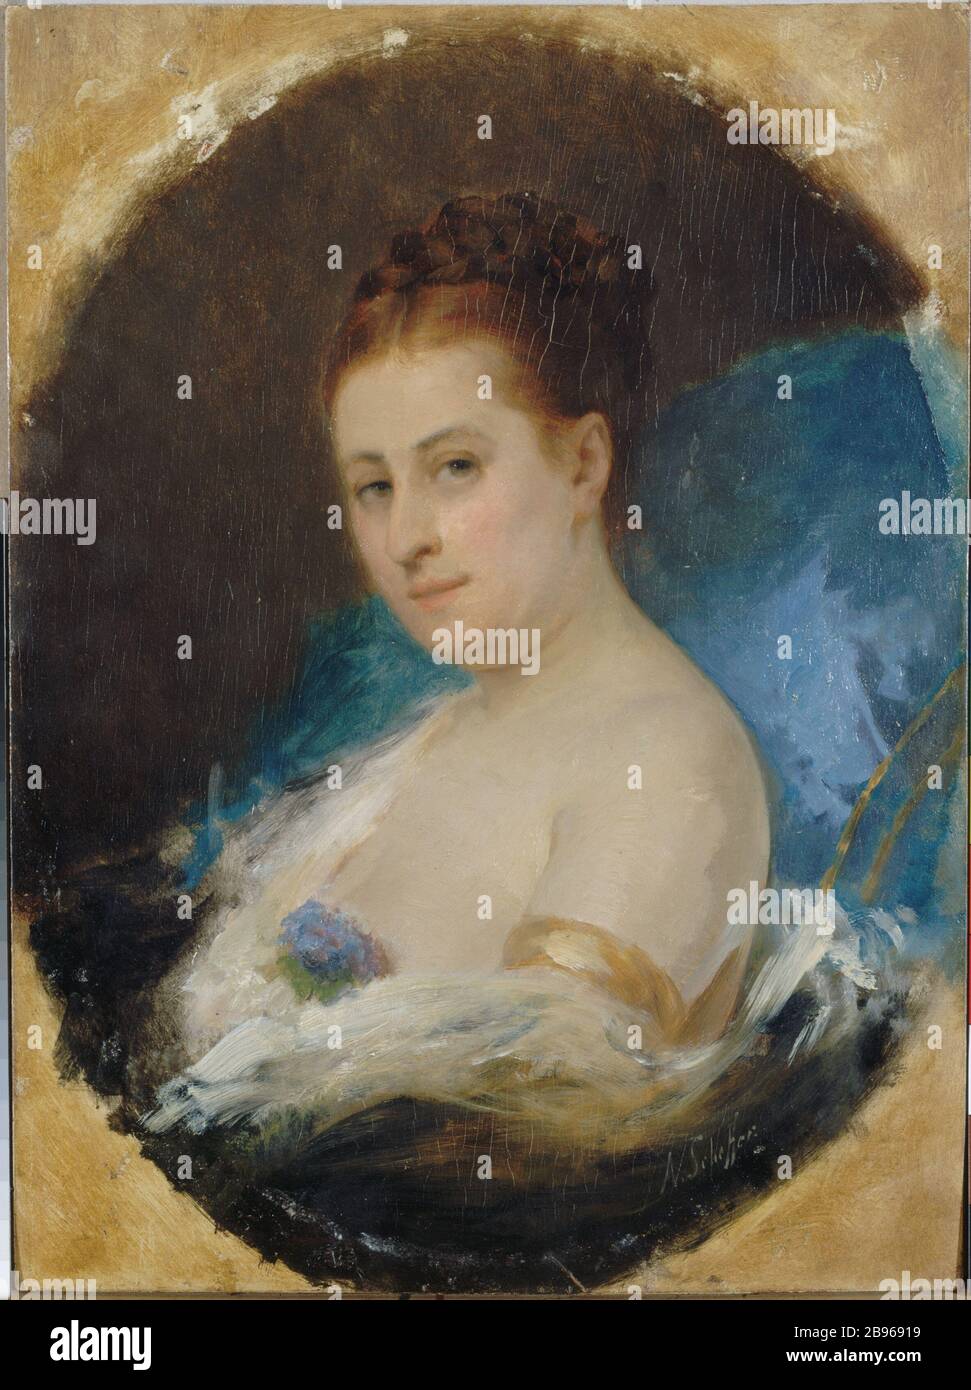 RETRATO DEL SUPUESTO Adelaide Ristori Ary Scheffer. 'Retrato présumé d'Adelaïde Ristori (1821-1906), tragédienne italienne'. París, musée de la Vie romantique. Foto de stock